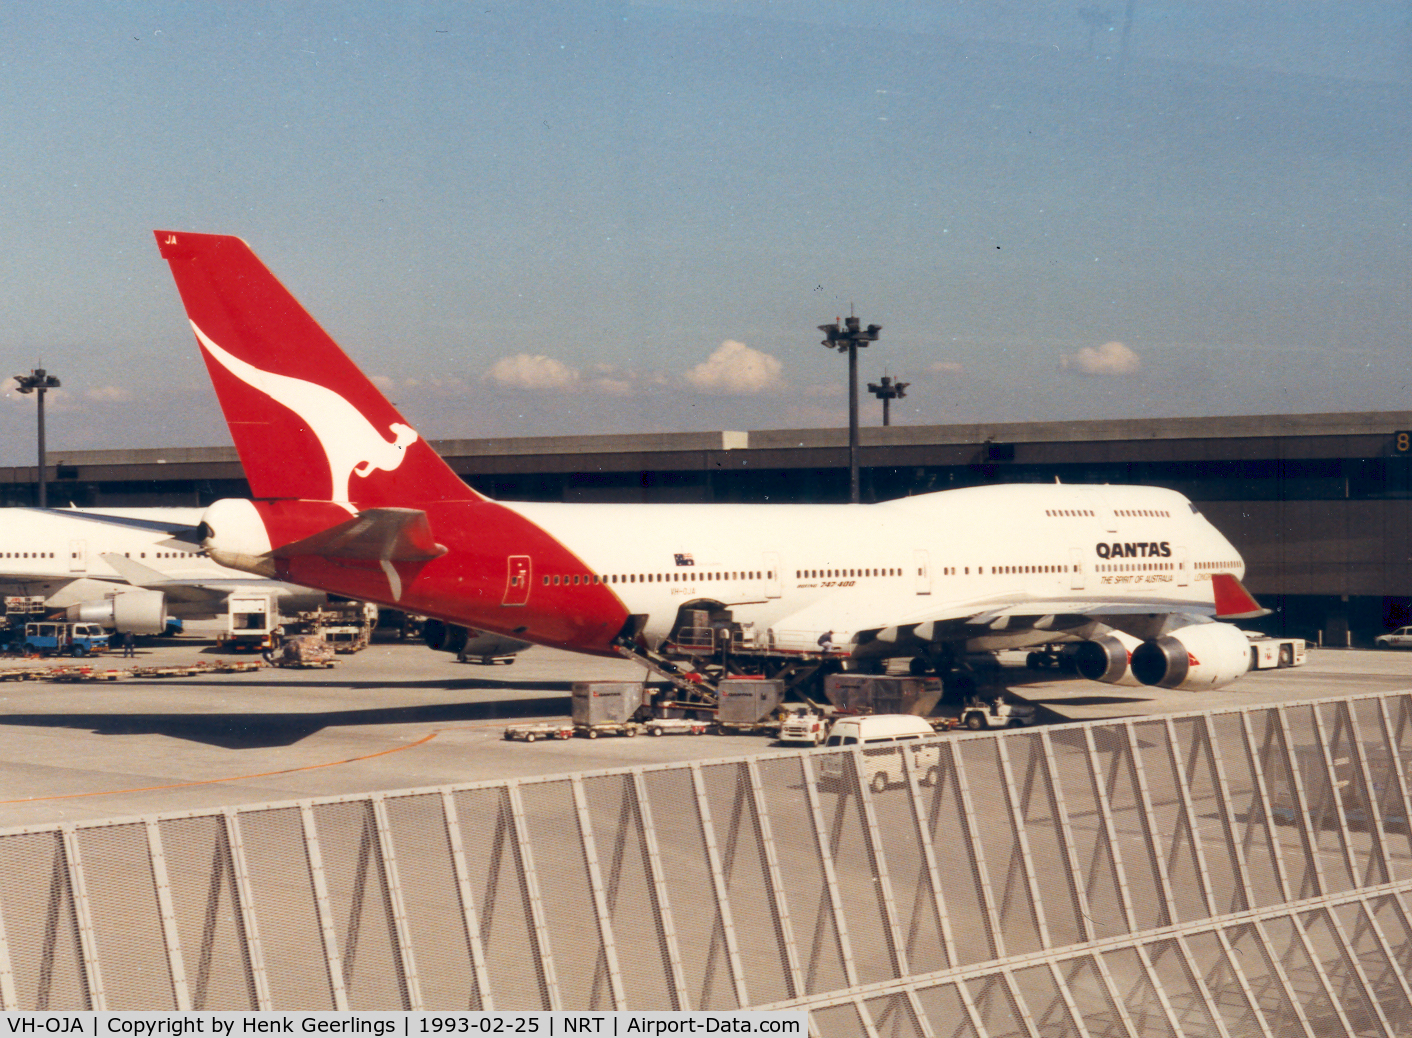 VH-OJA, 1989 Boeing 747-438 C/N 24354, Qantas 747 at Narita - Tokyo